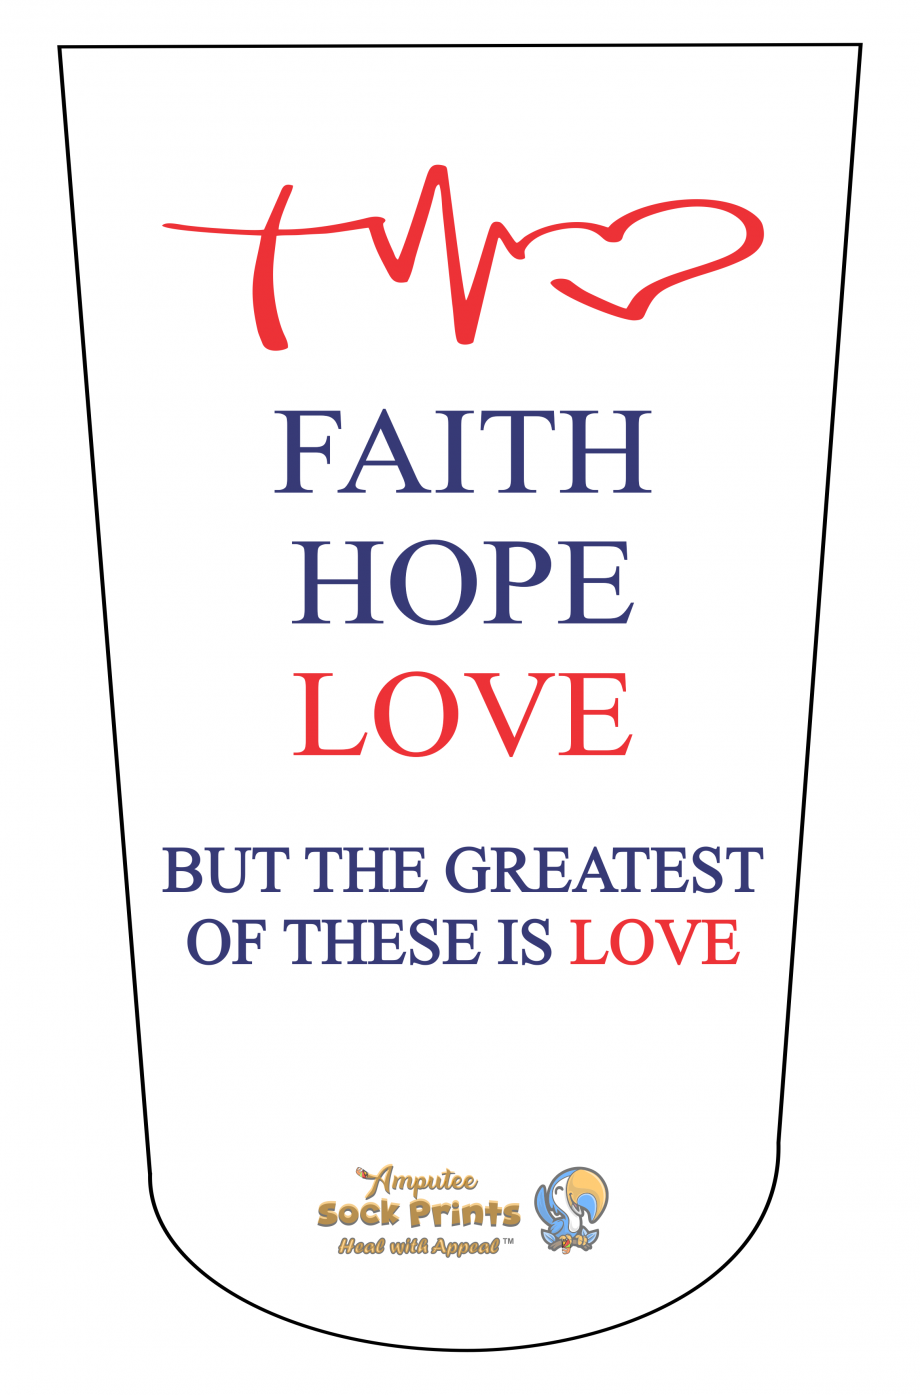 Faith hope love logo BTKA white V1